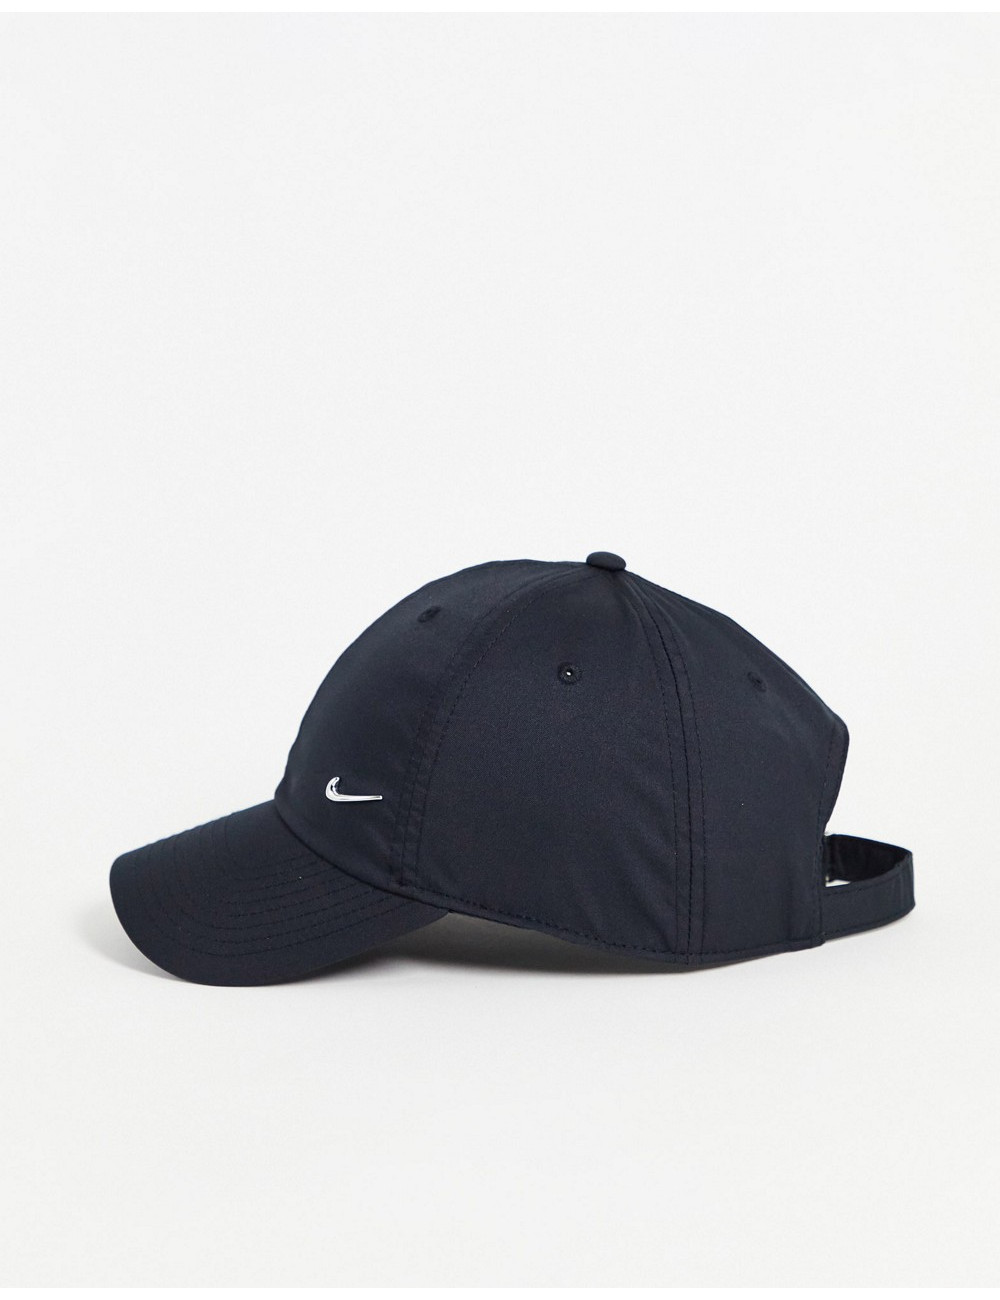 Nike metal swoosh cap in navy